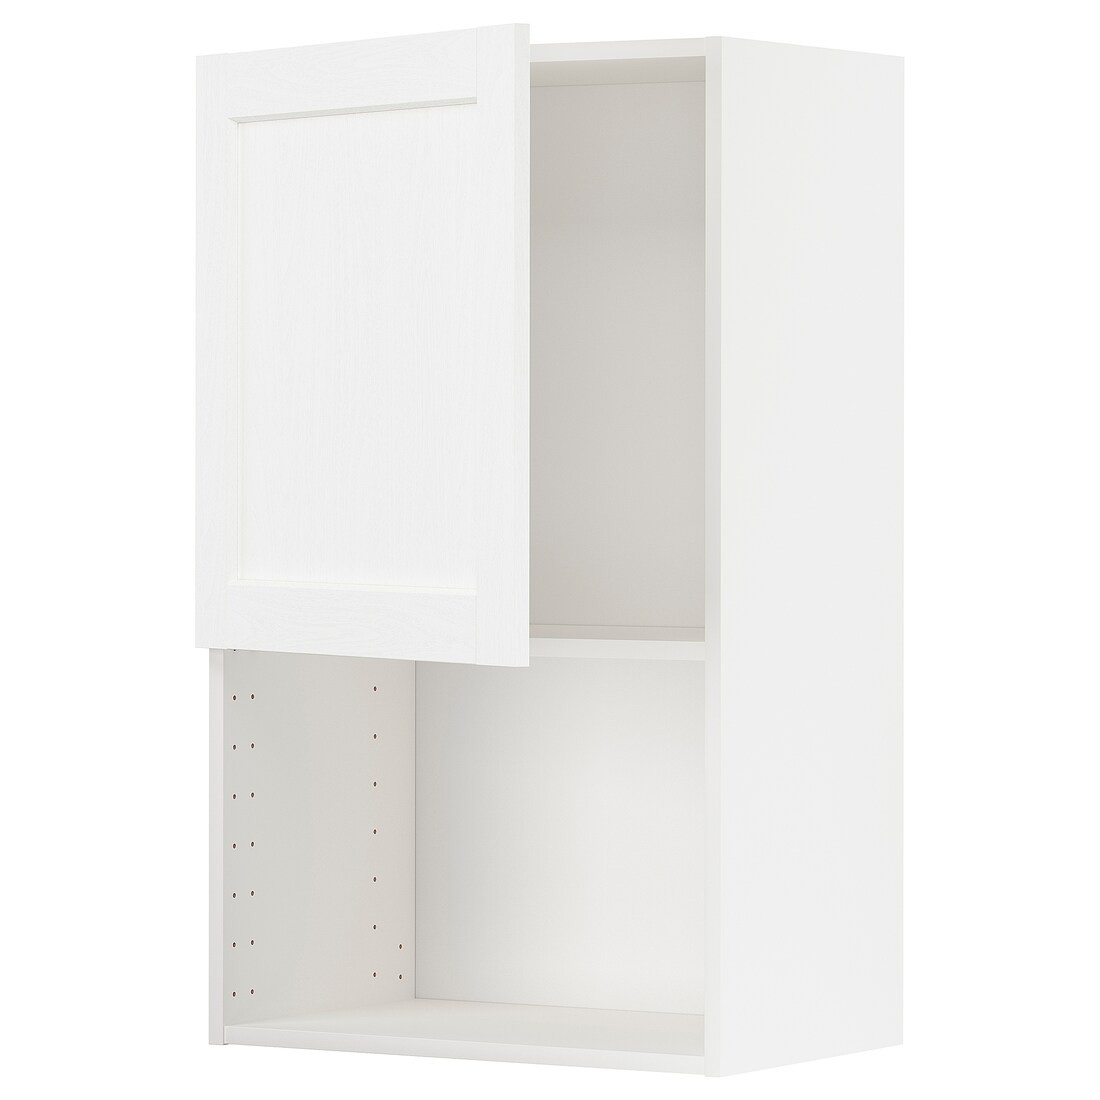 METOD МЕТОД Навесной шкаф для СВЧ-печи, белый Enköping / белый имитация дерева, 60x100 см